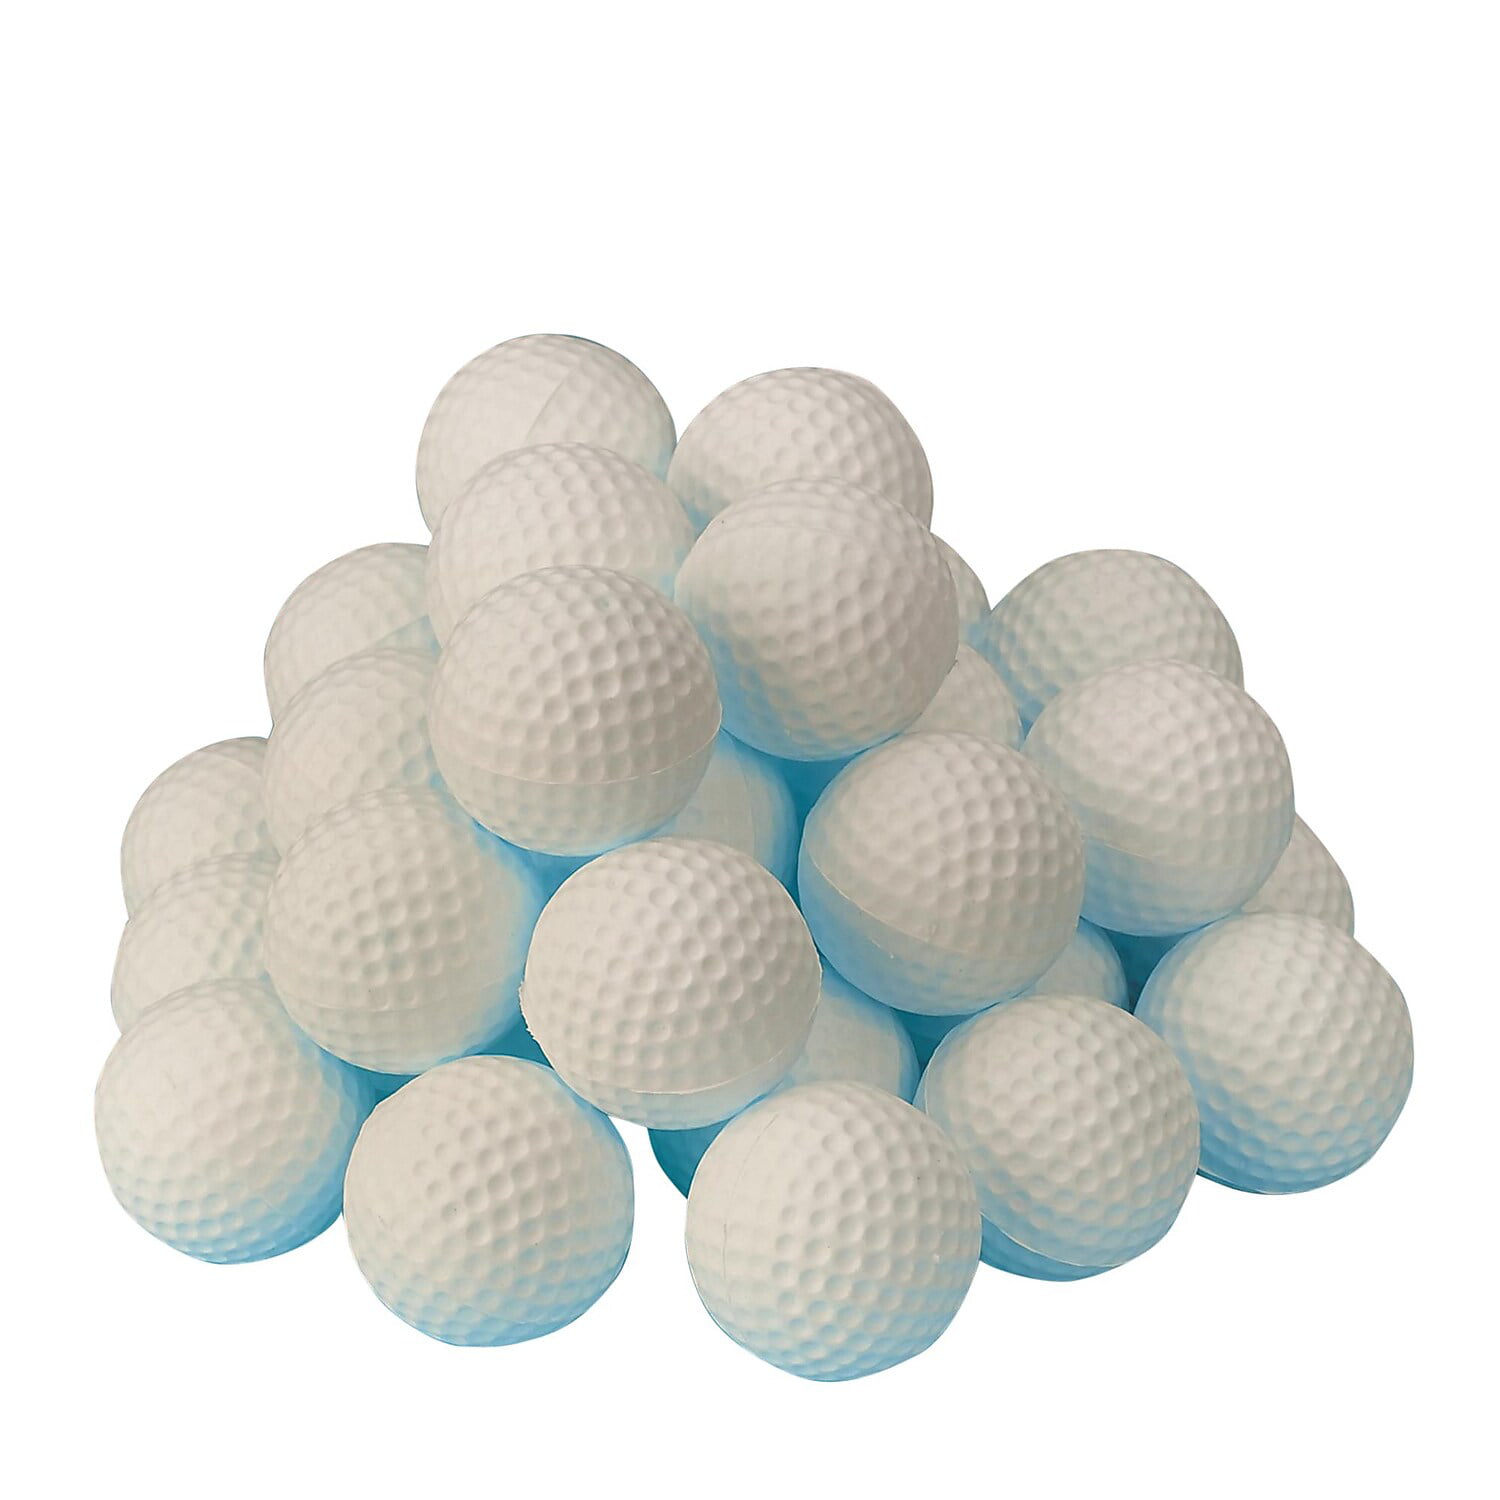 ALMOSTGOLF Point3 Limited Flight Practice Golf Balls – Realistic 